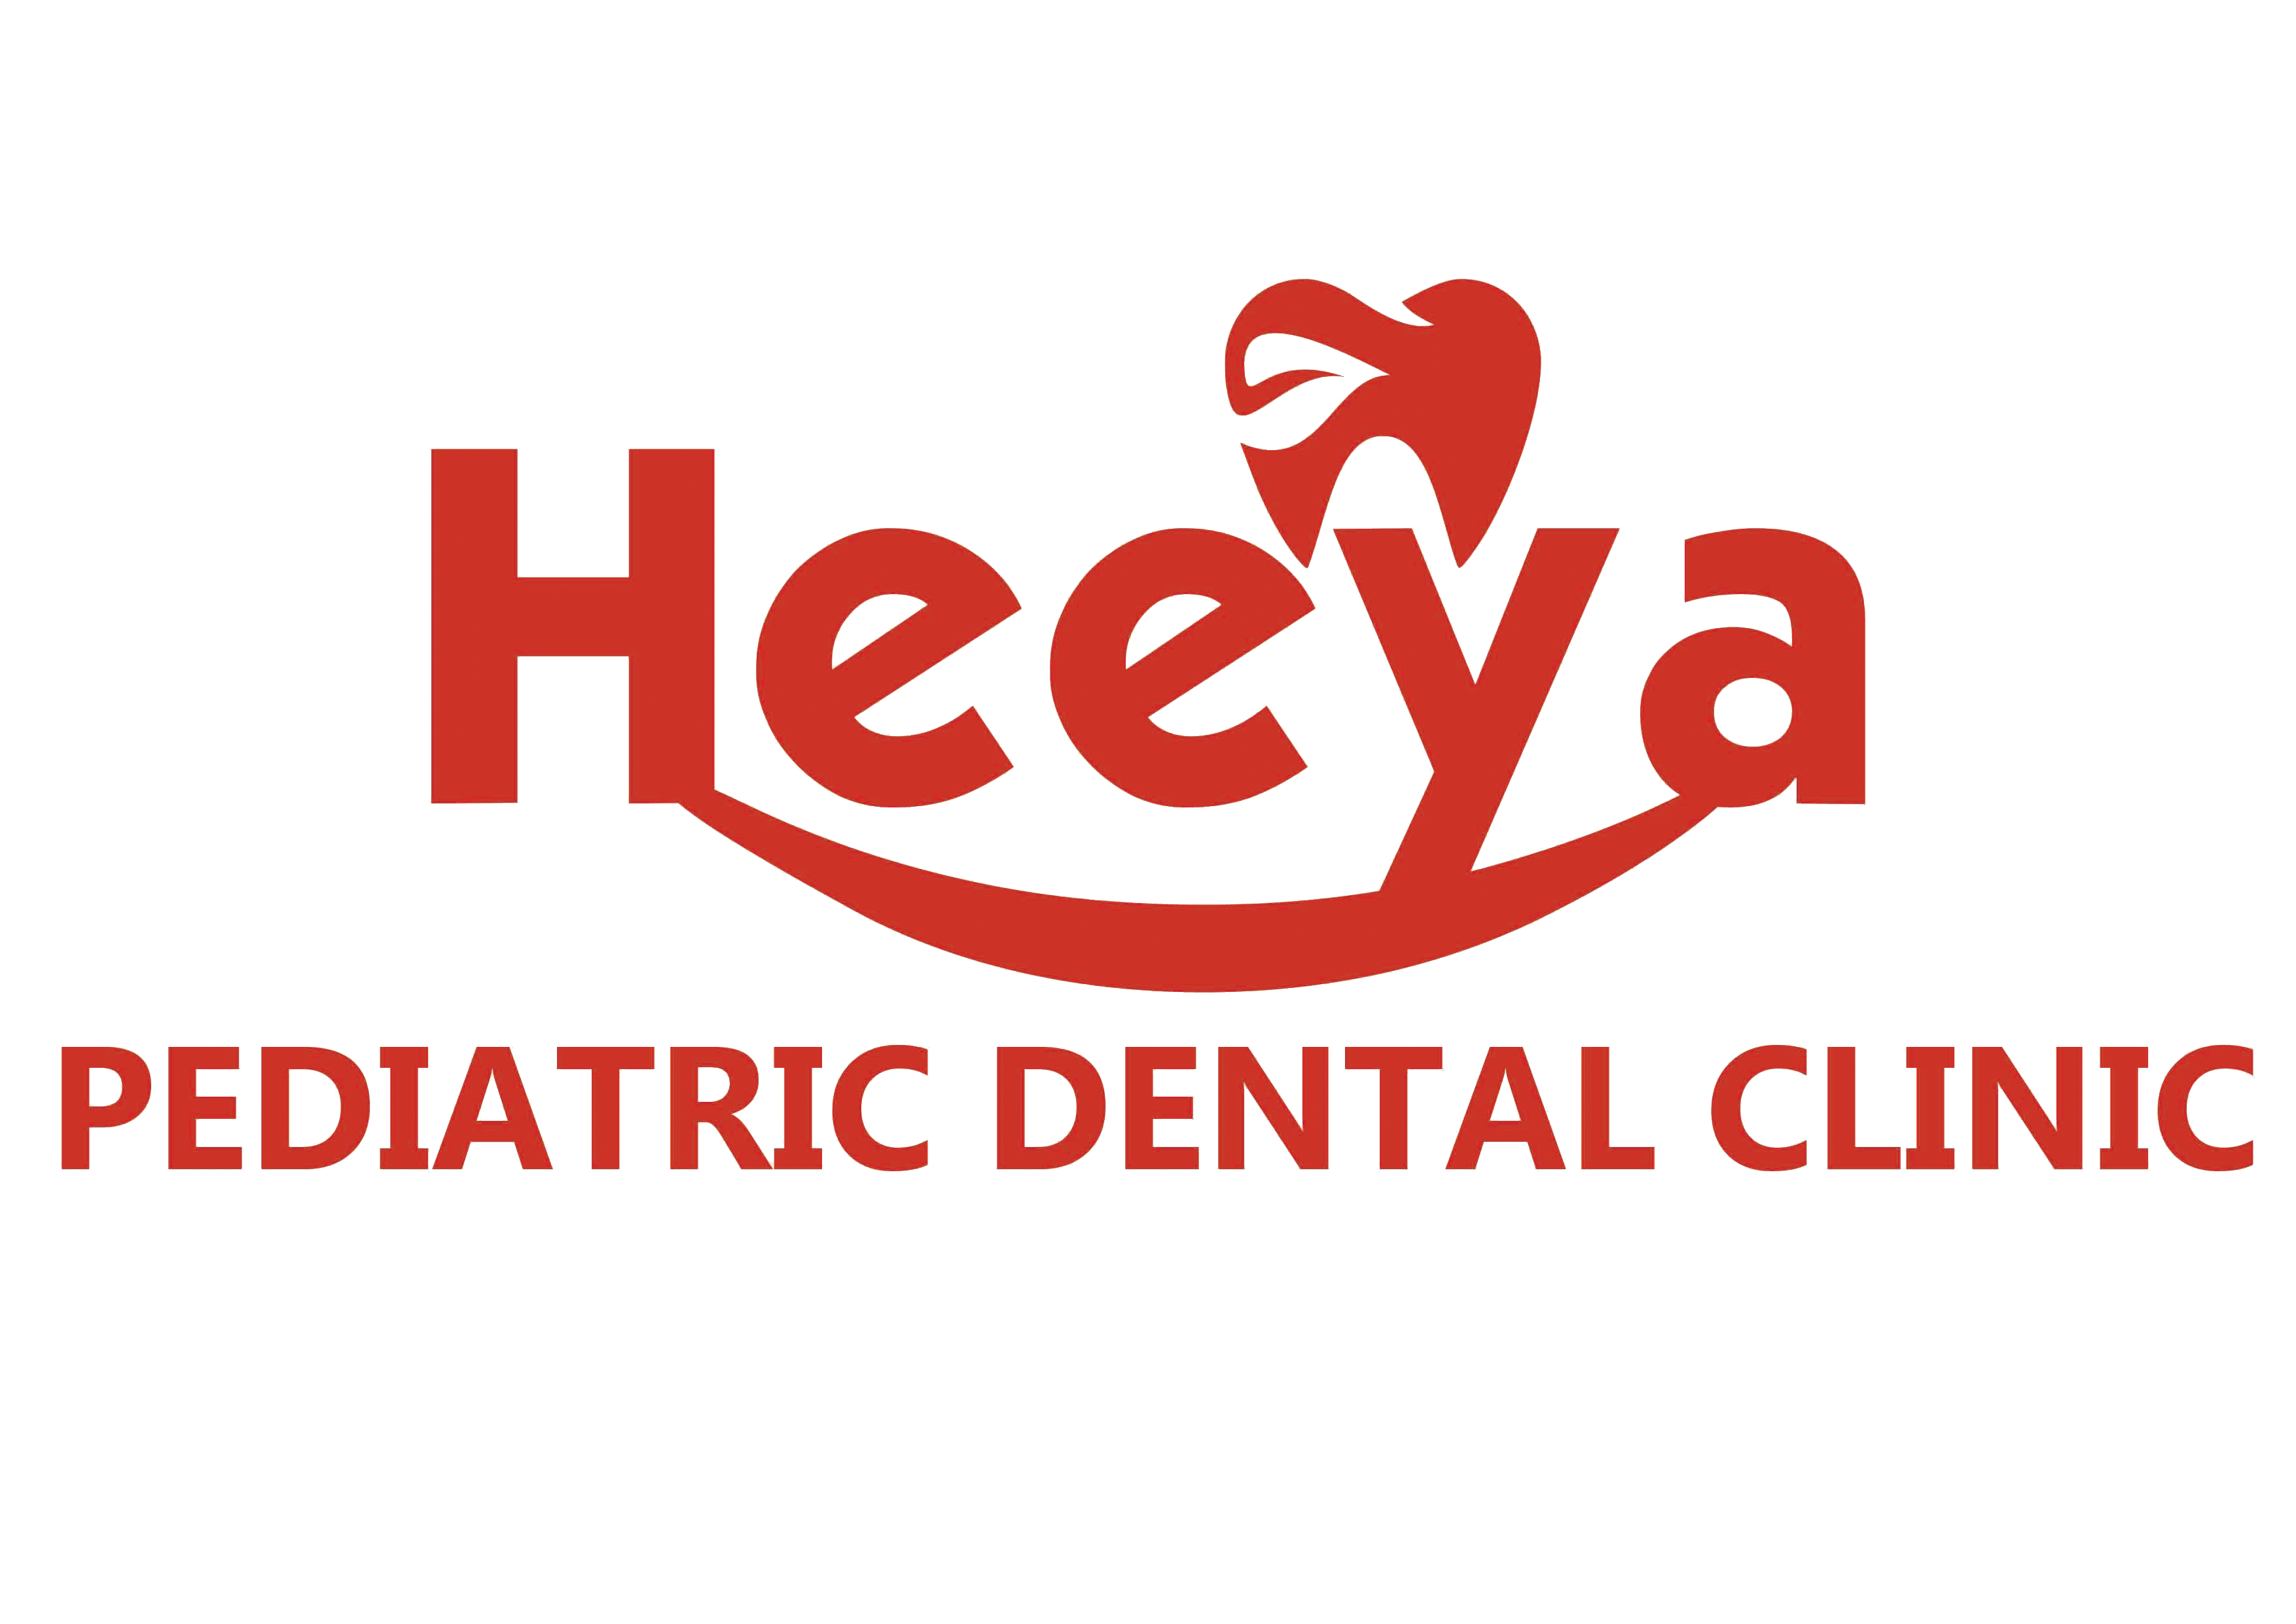 Heeya Pediatric Dental Clinic|Pharmacy|Medical Services